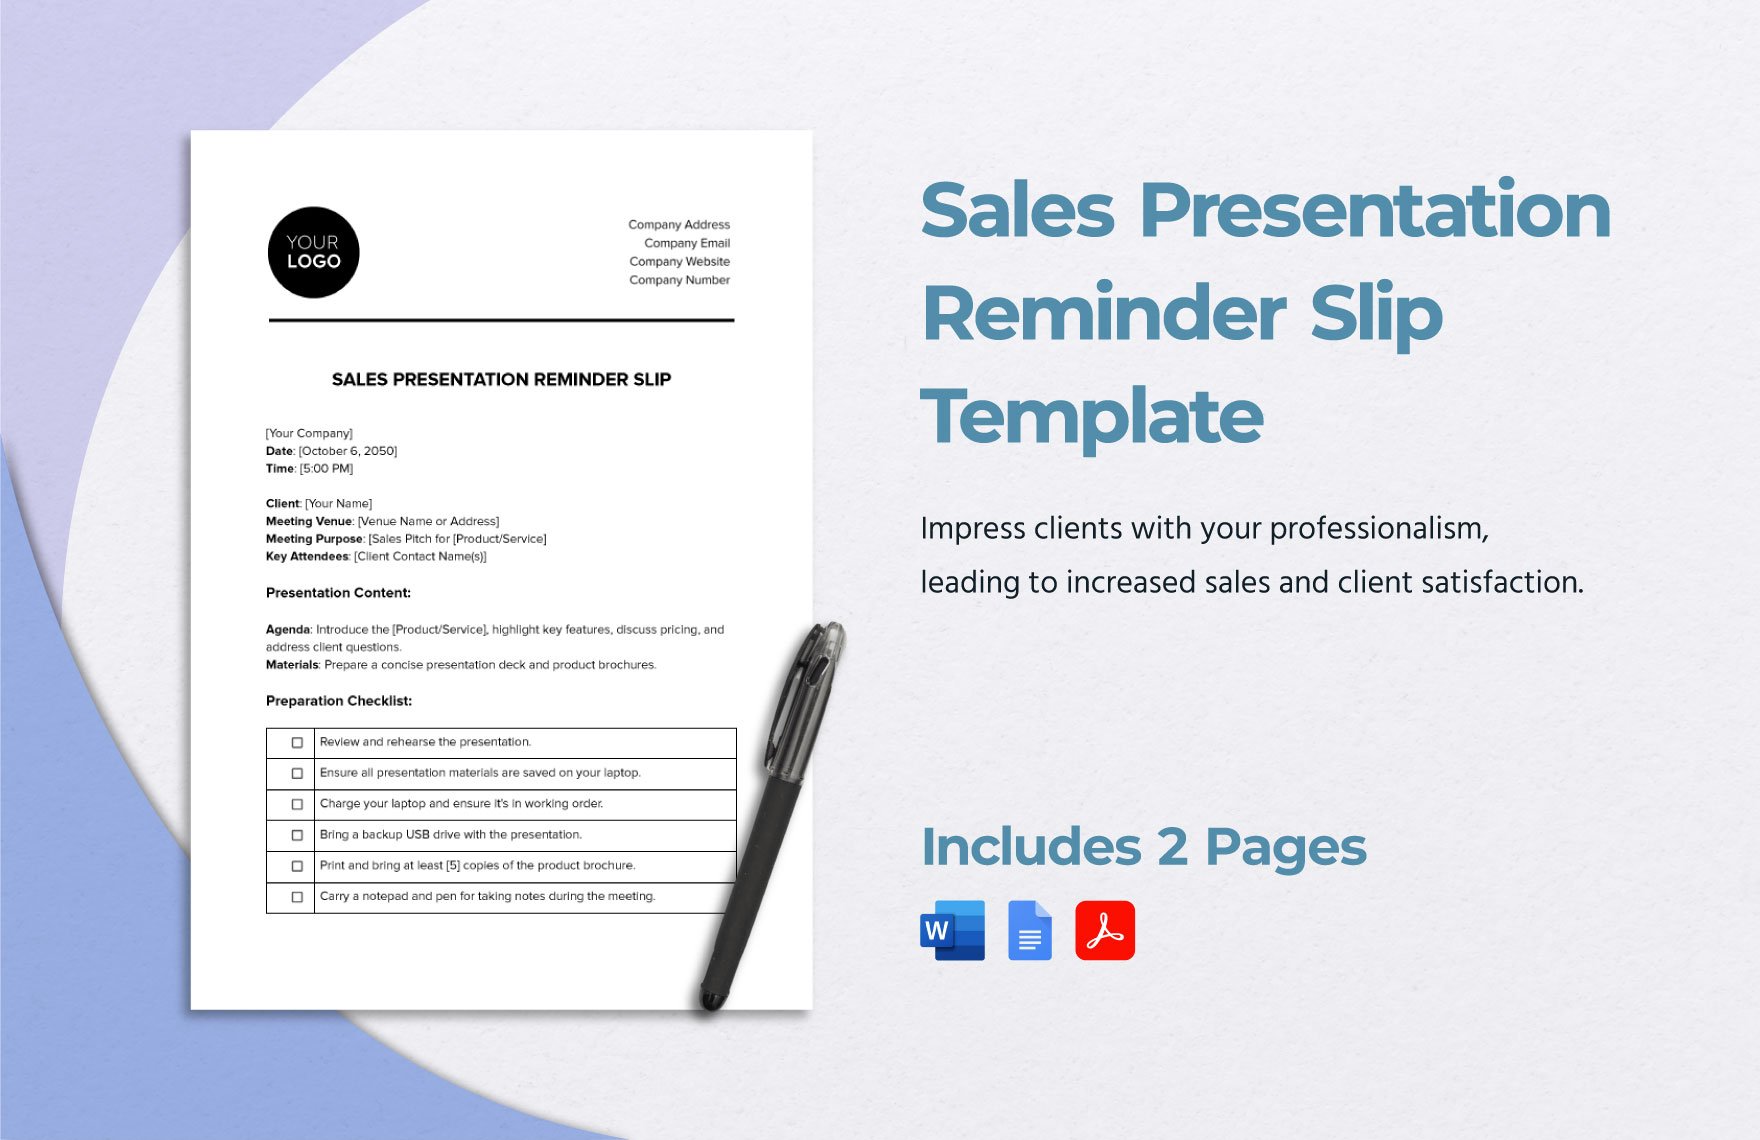 Sales Presentation Reminder Slip  Template in Word, Google Docs, PDF